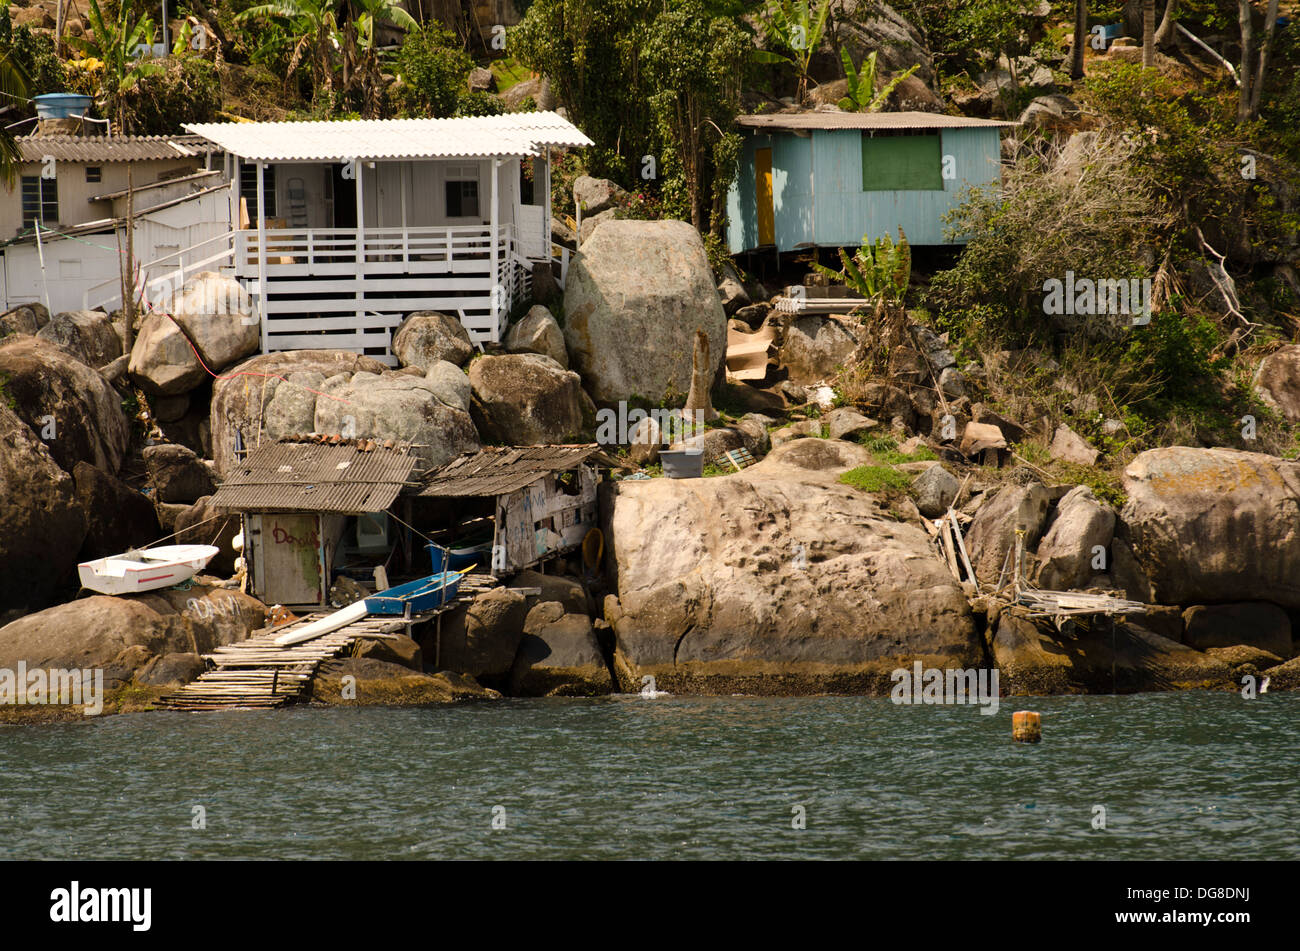 Hause at Ilha dos Buzios island, close to Ilhabela, Sao Paulo shore, Brazil. small fisherman community. Stock Photo